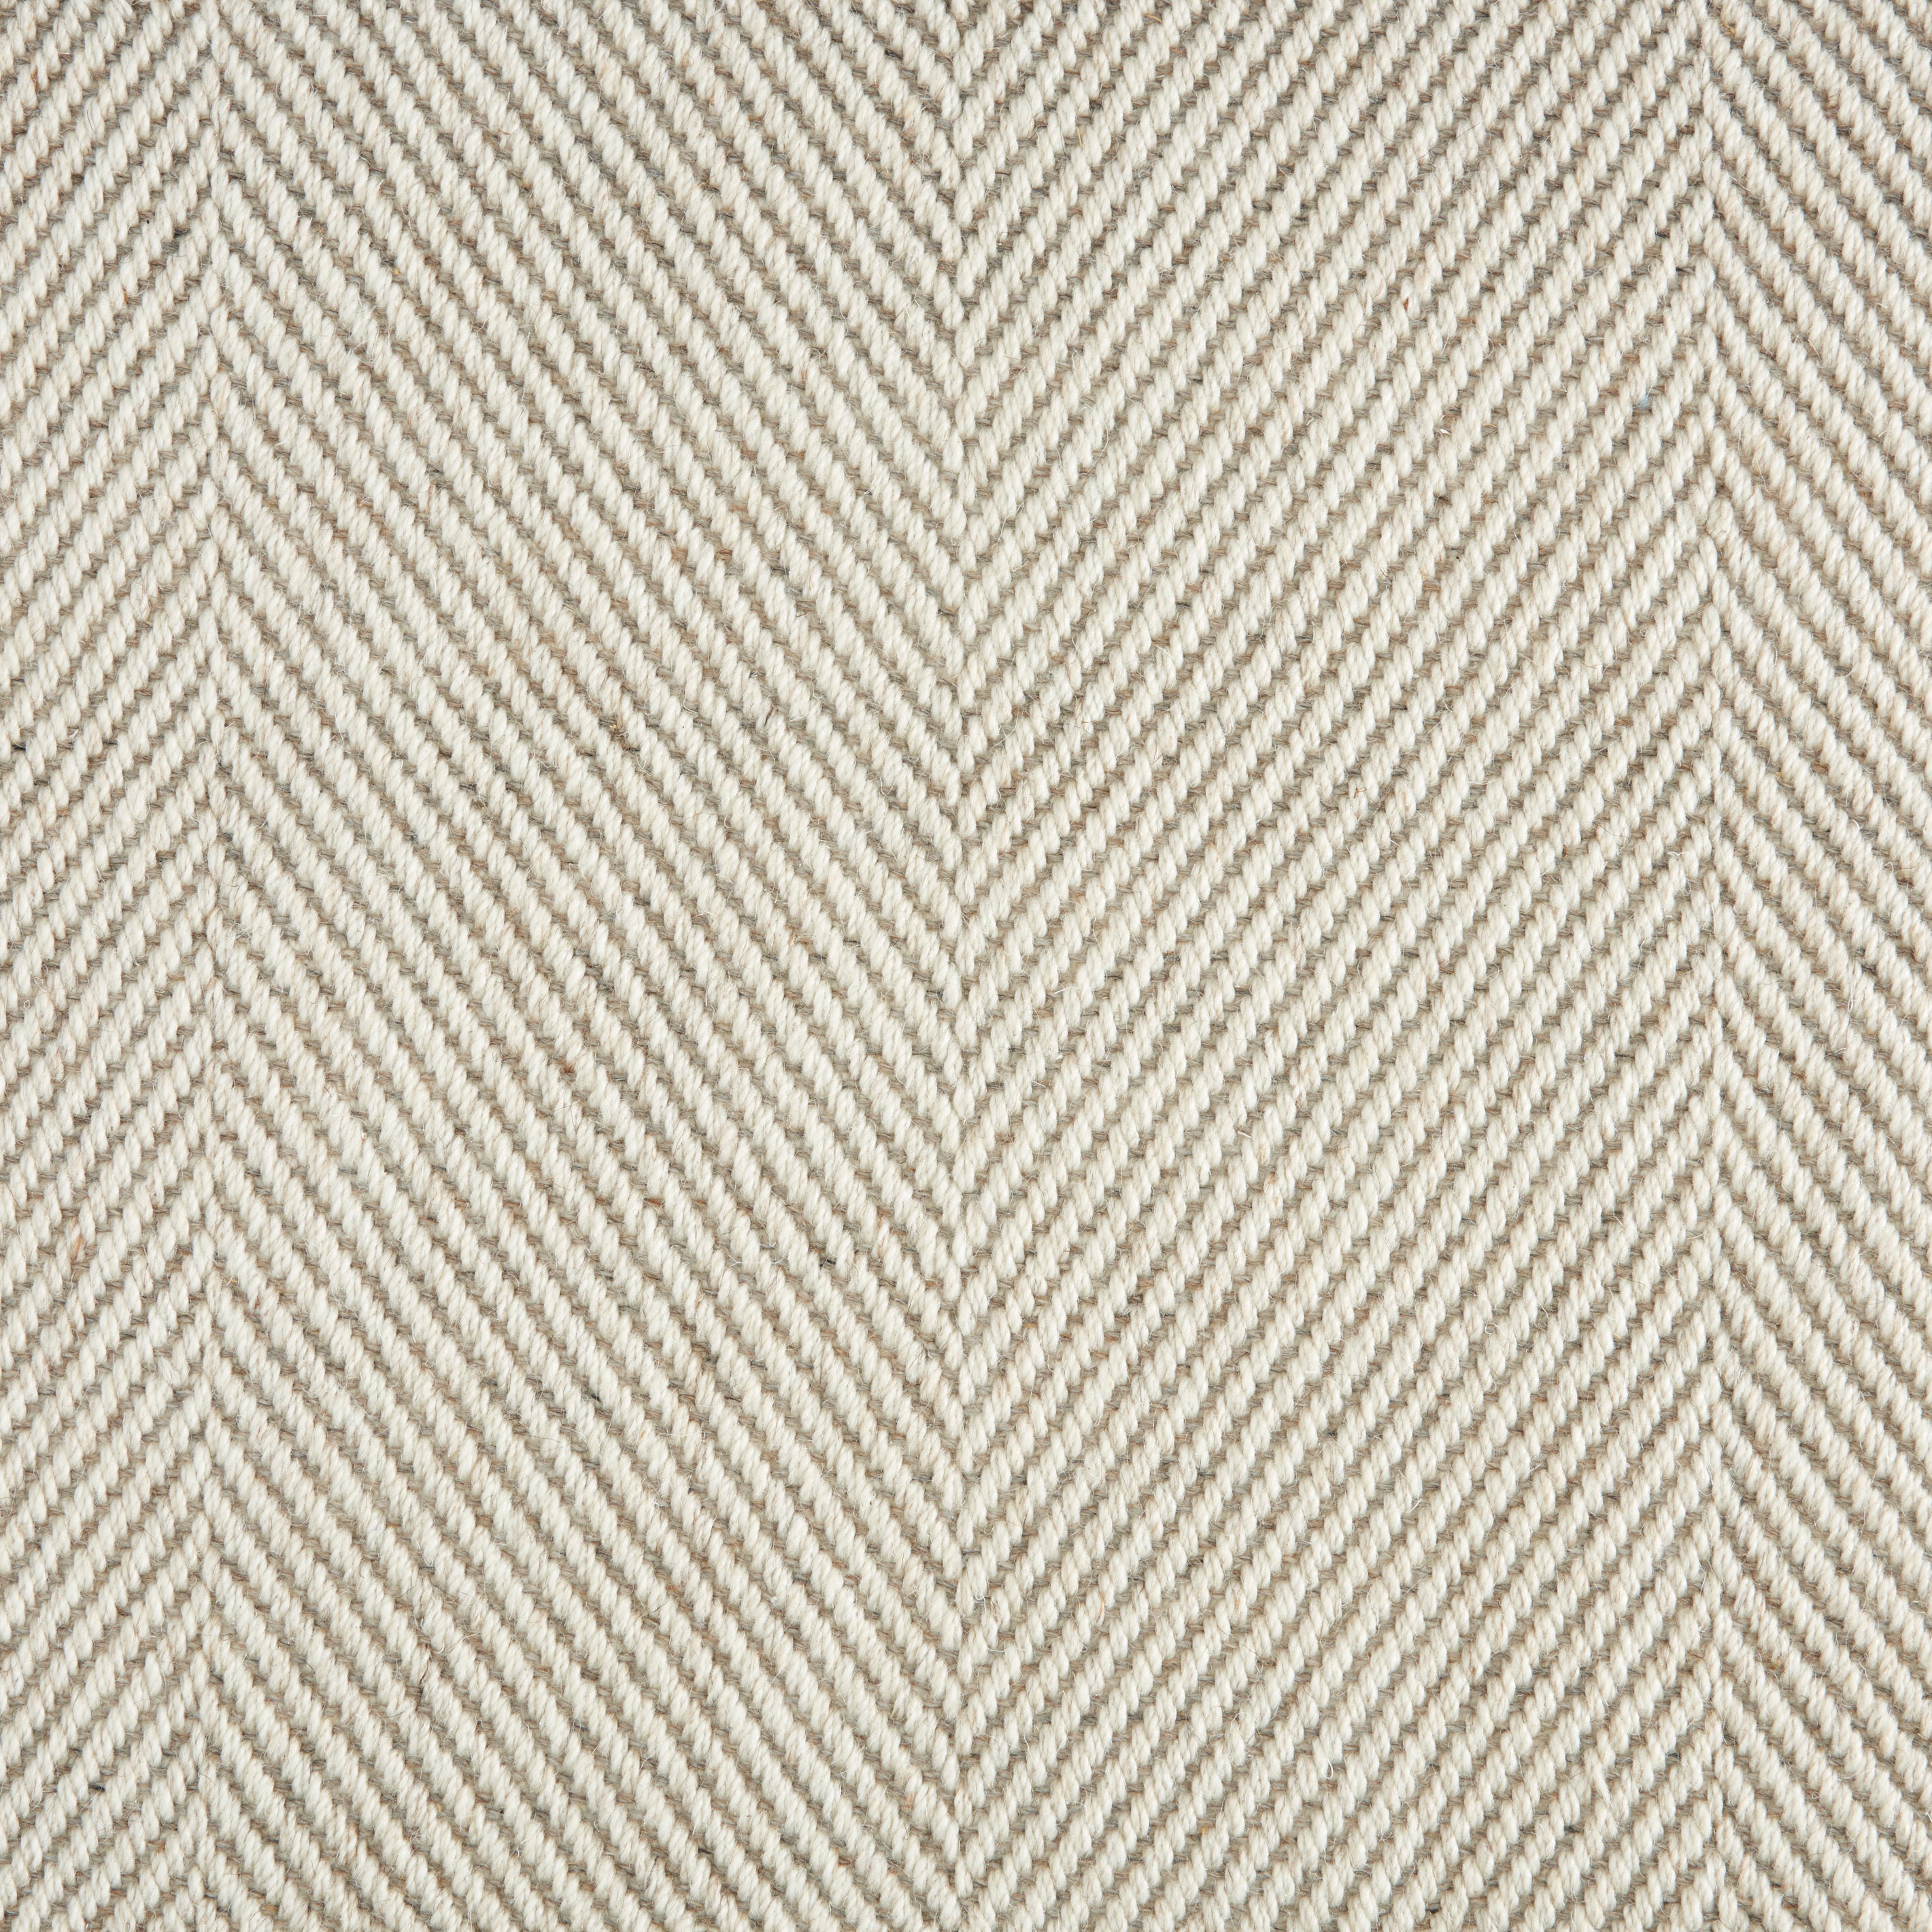 Wool-blend broadloom carpet swatch in a flat herringbone weave in cream and tan.